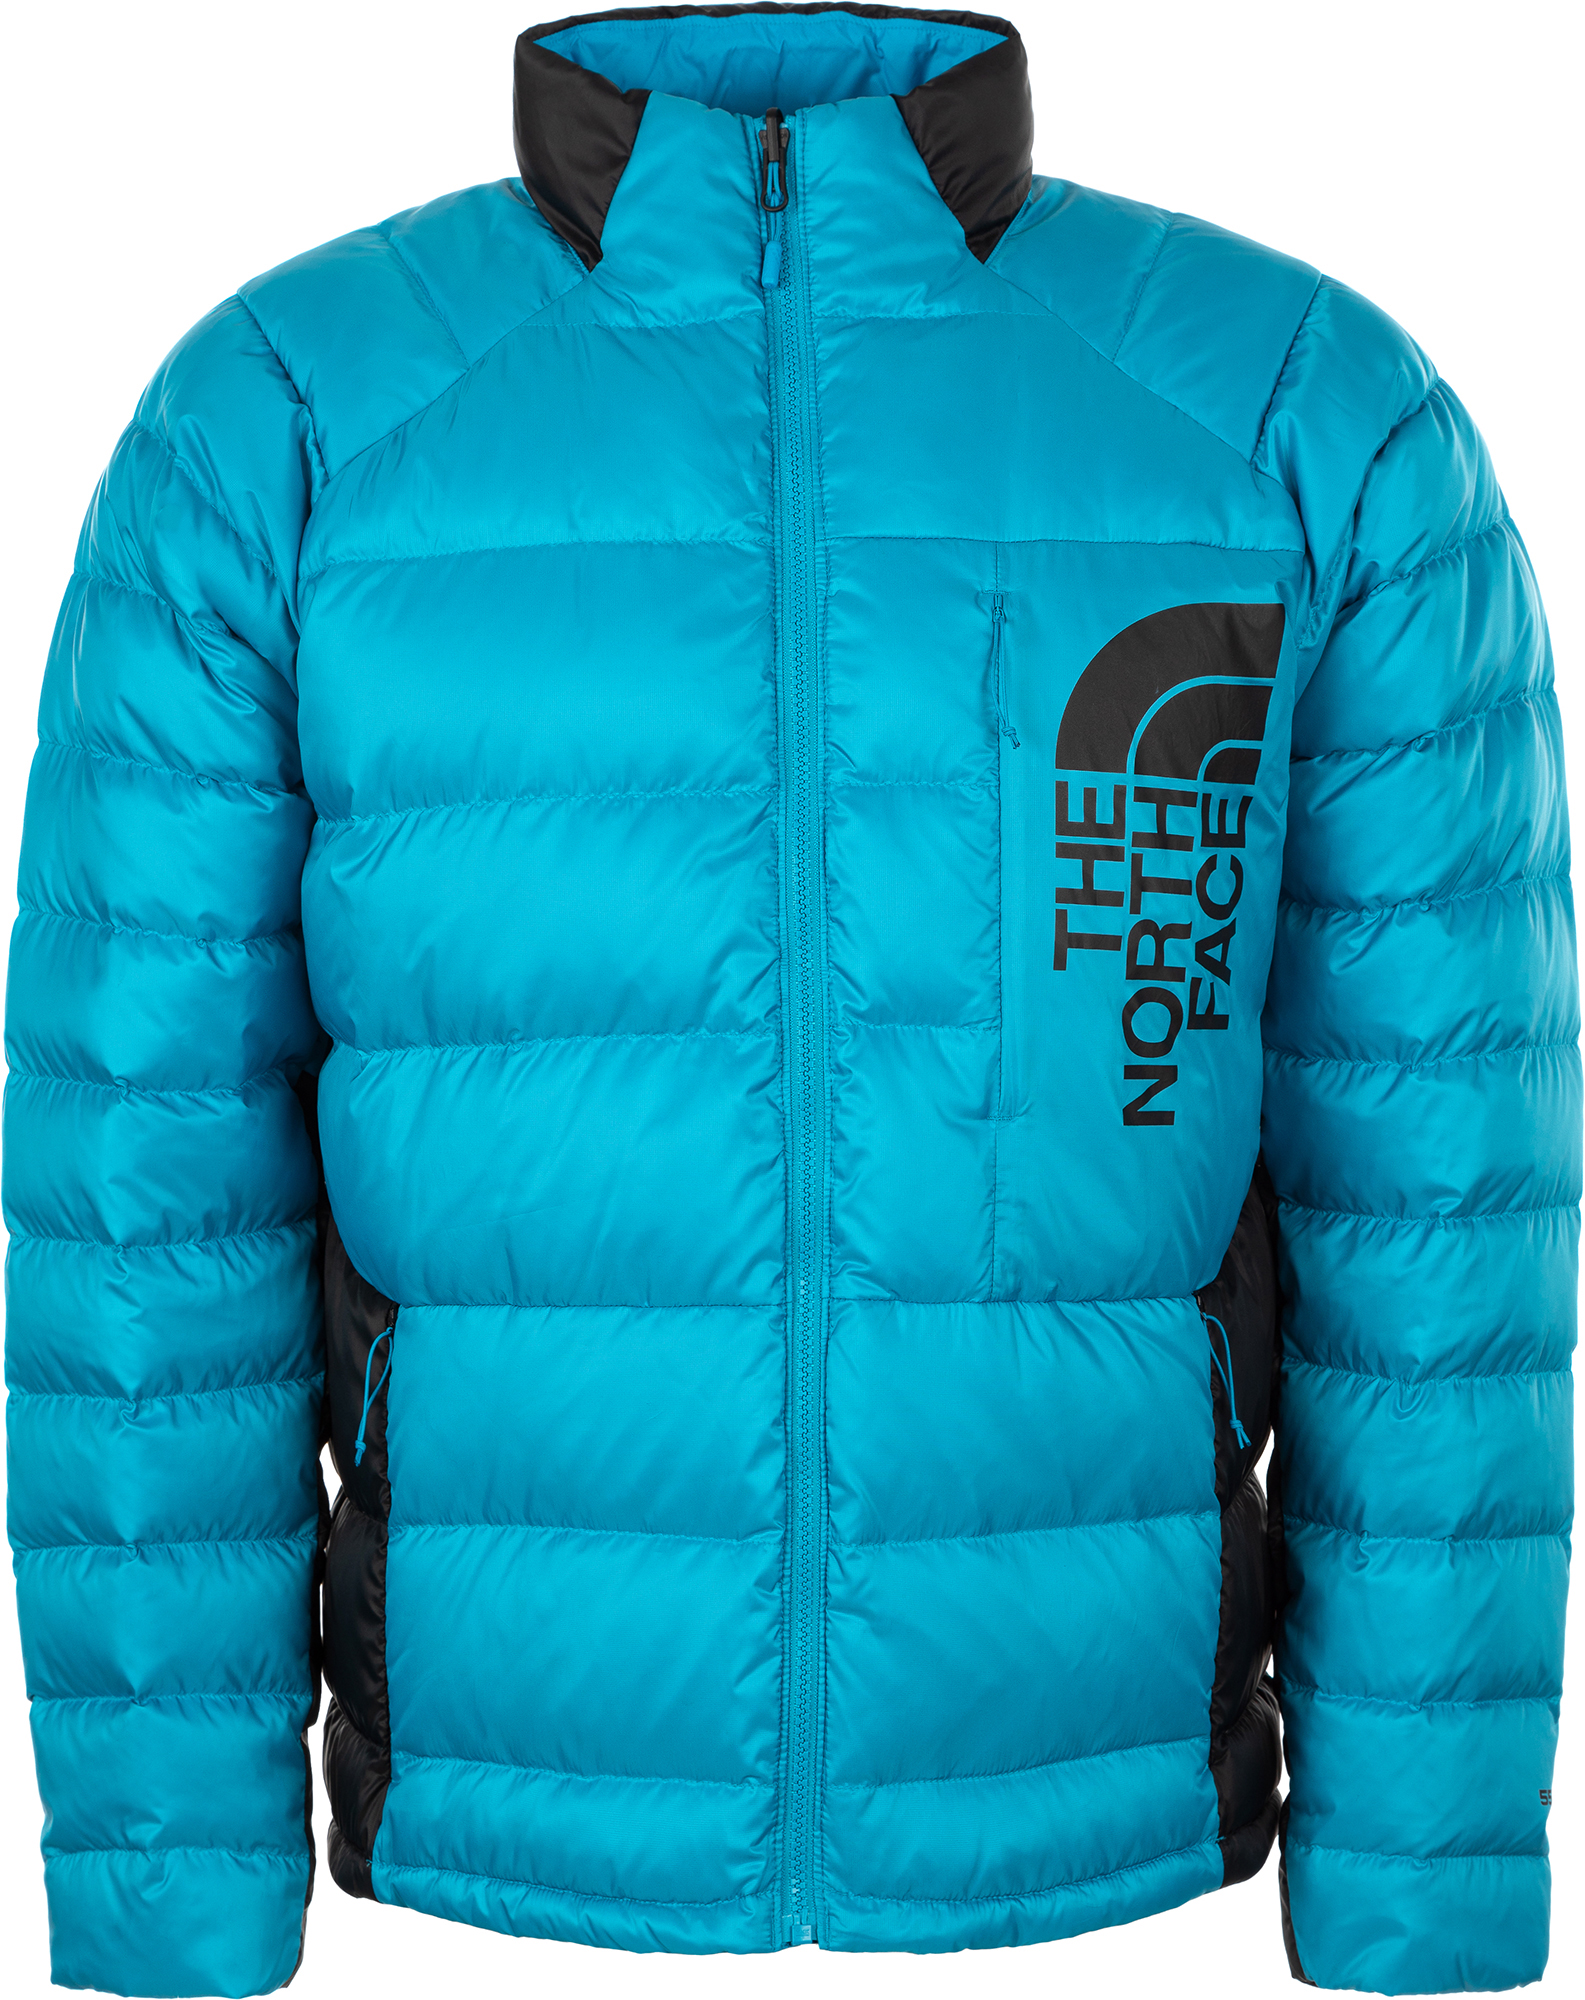 Куртка пуховая мужская The North Face Peakfrontier II, размер 46